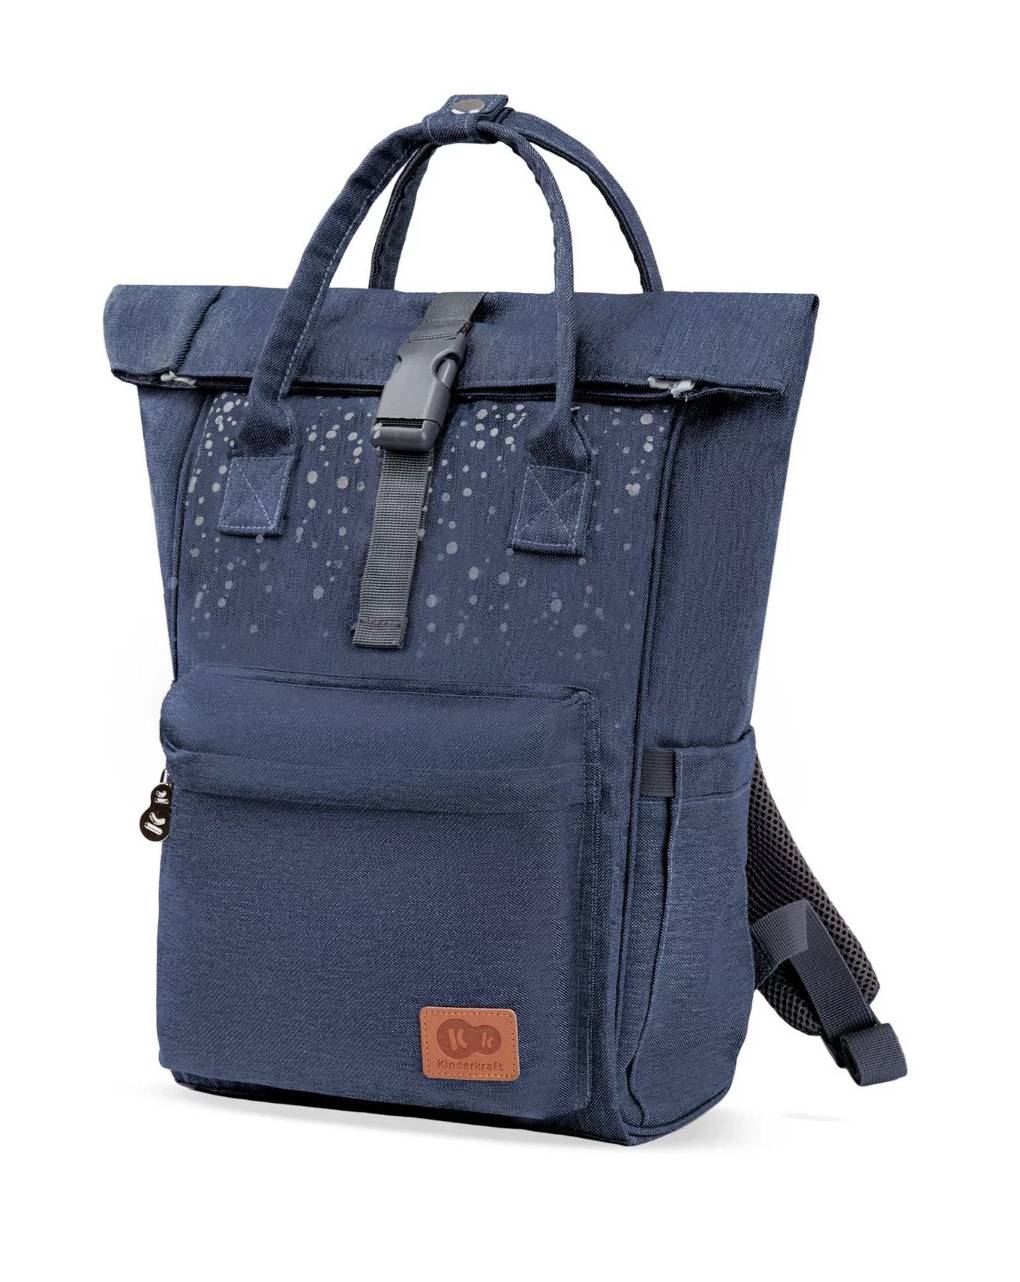 Kinderkraft τσάντα αλλαξιέρα backpack moonpack confetti dem